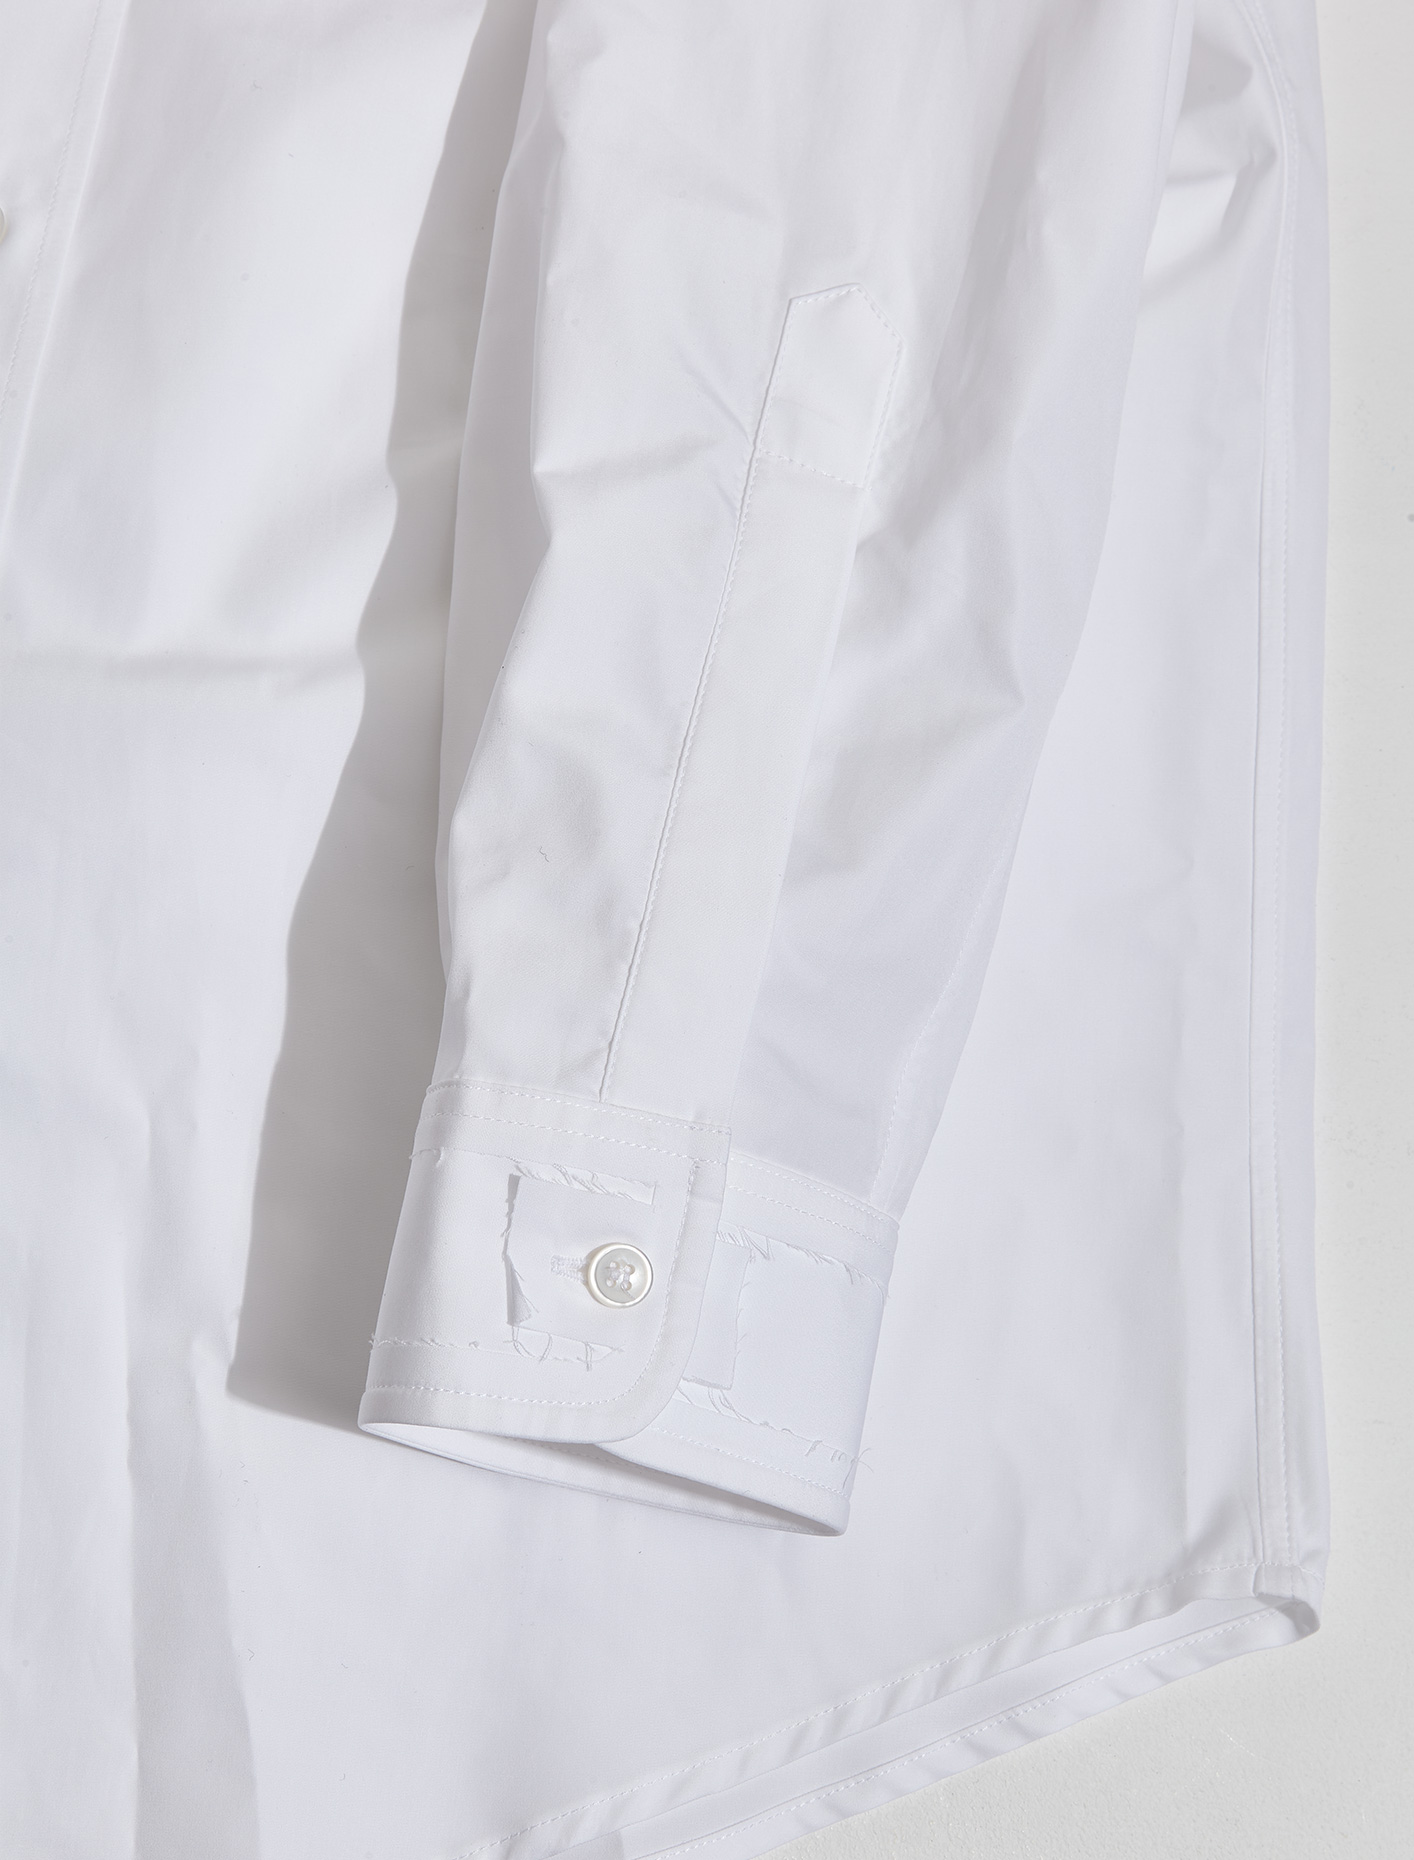 Maison Margiela Classic Shirt in Optic White | Voo Store Berlin ...